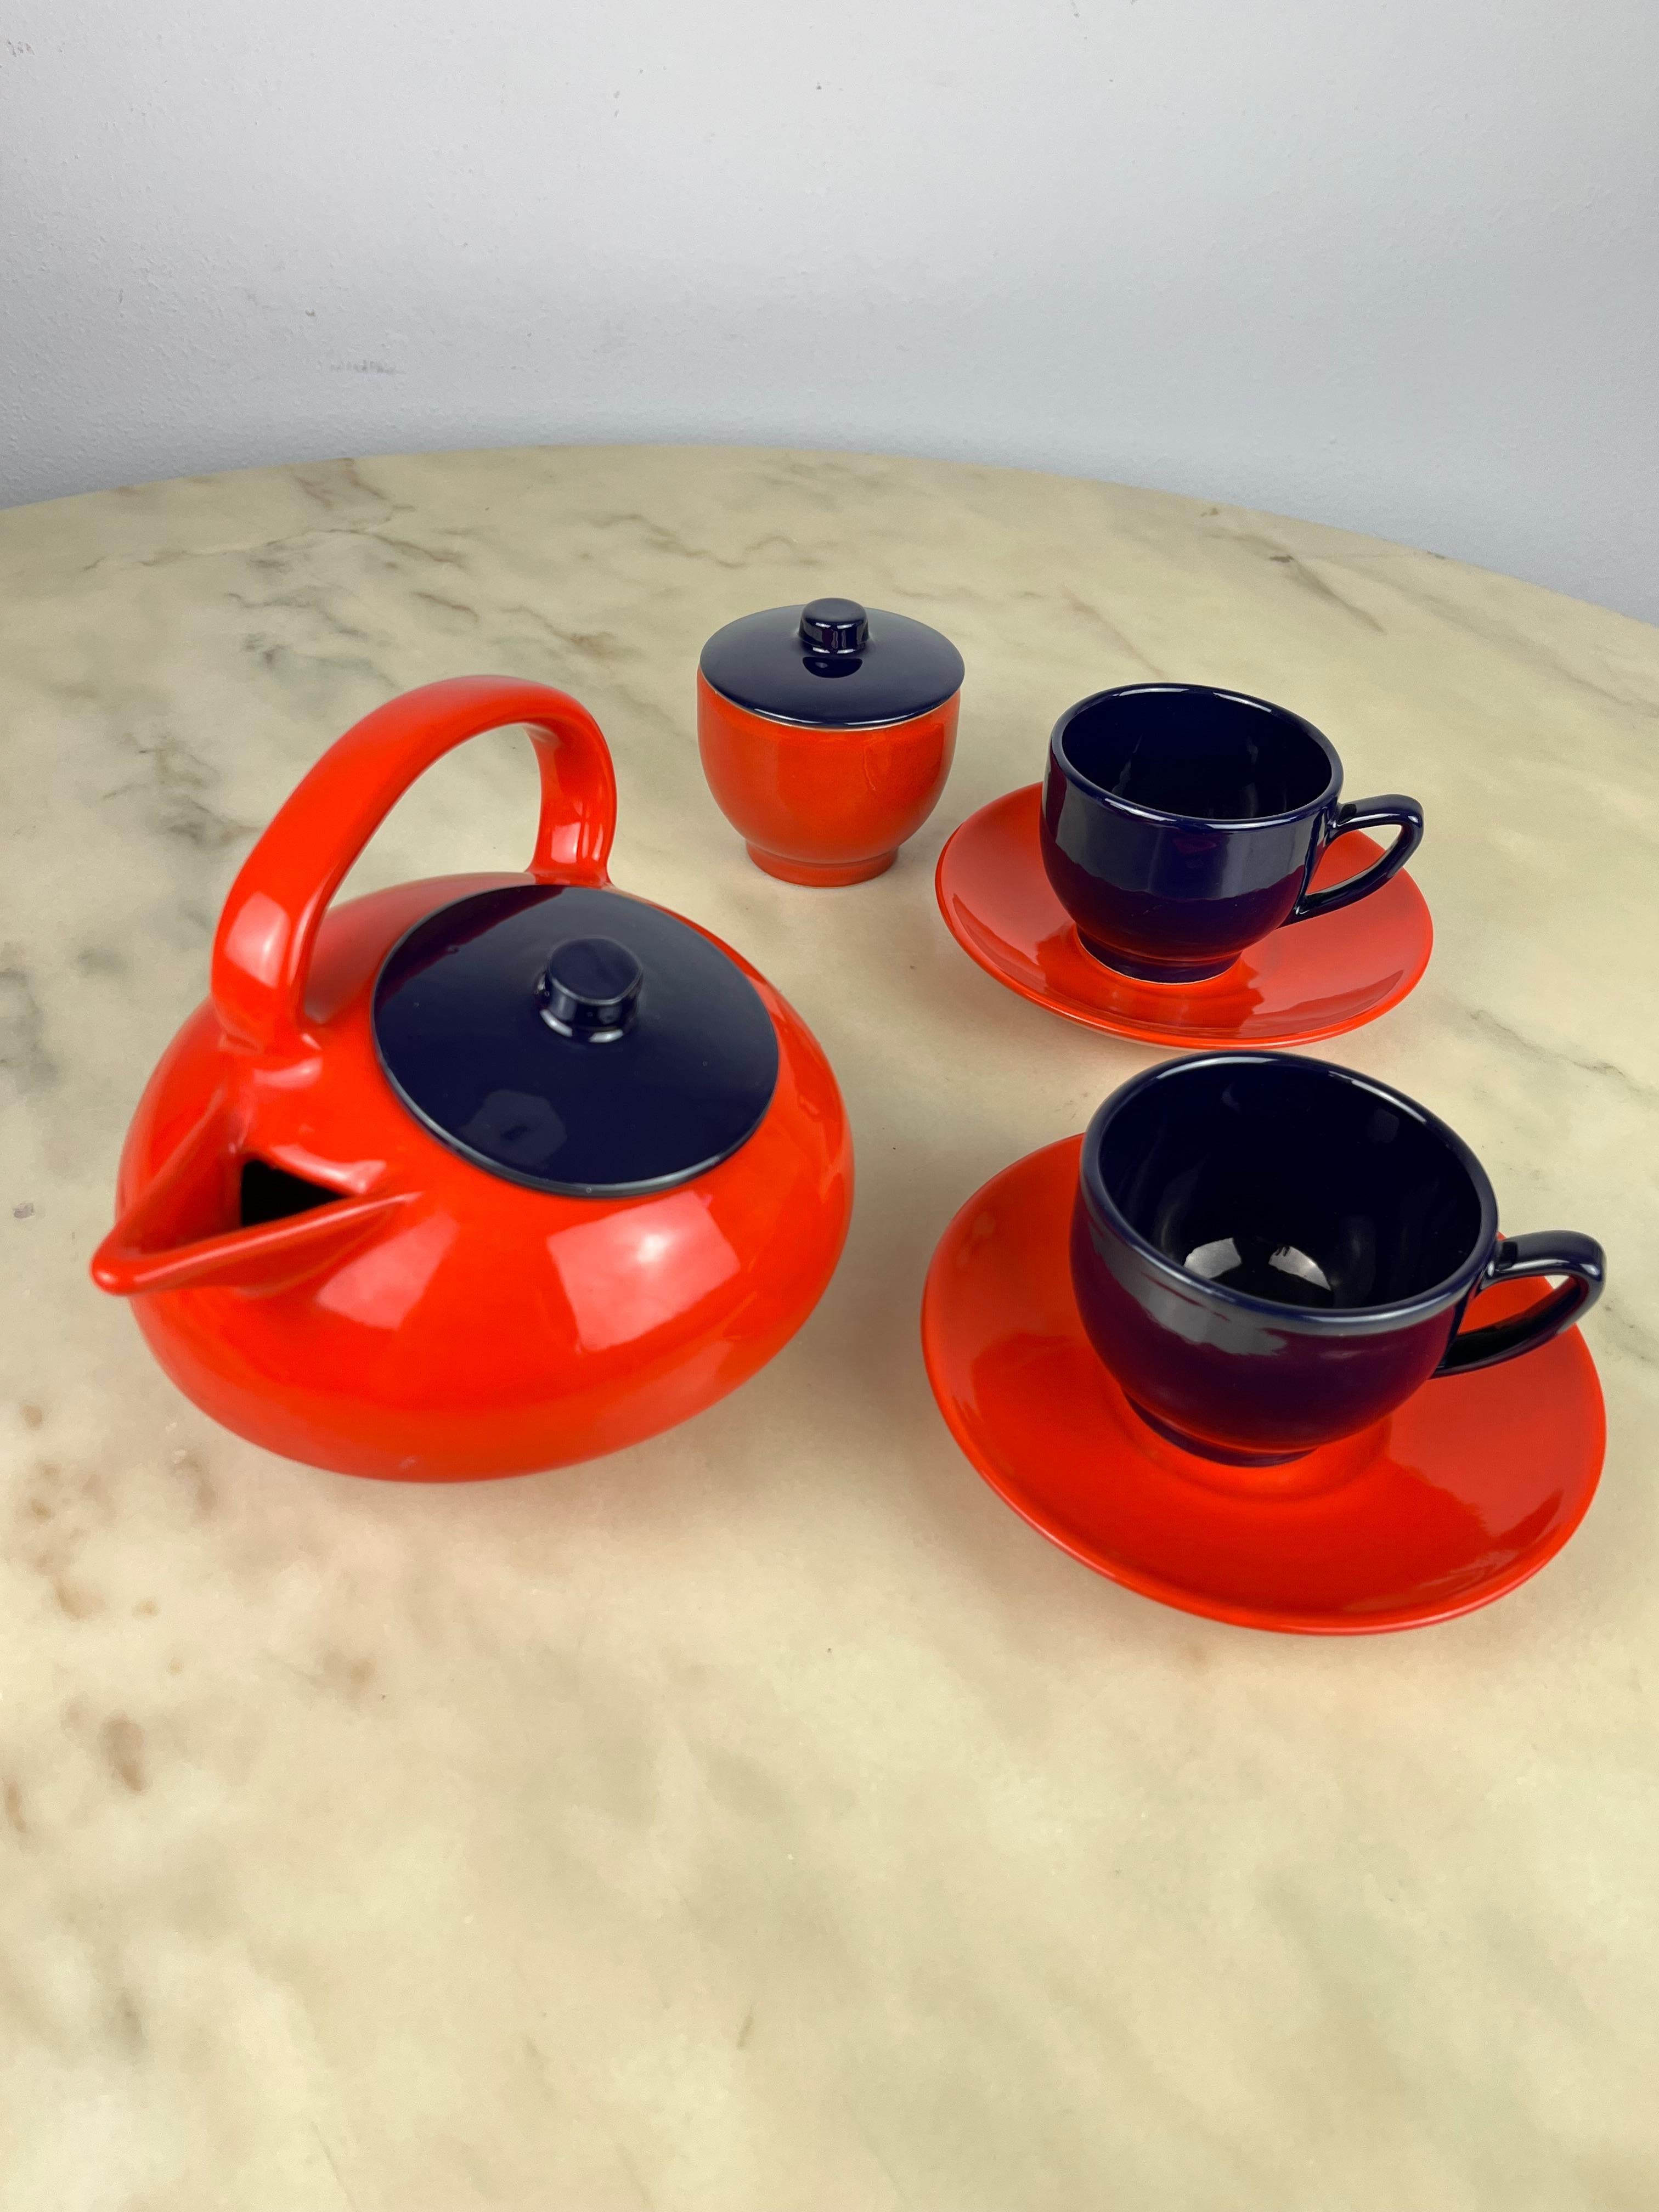  Vintage Ceramic Tea Set, Italy, 1970s For Sale 3